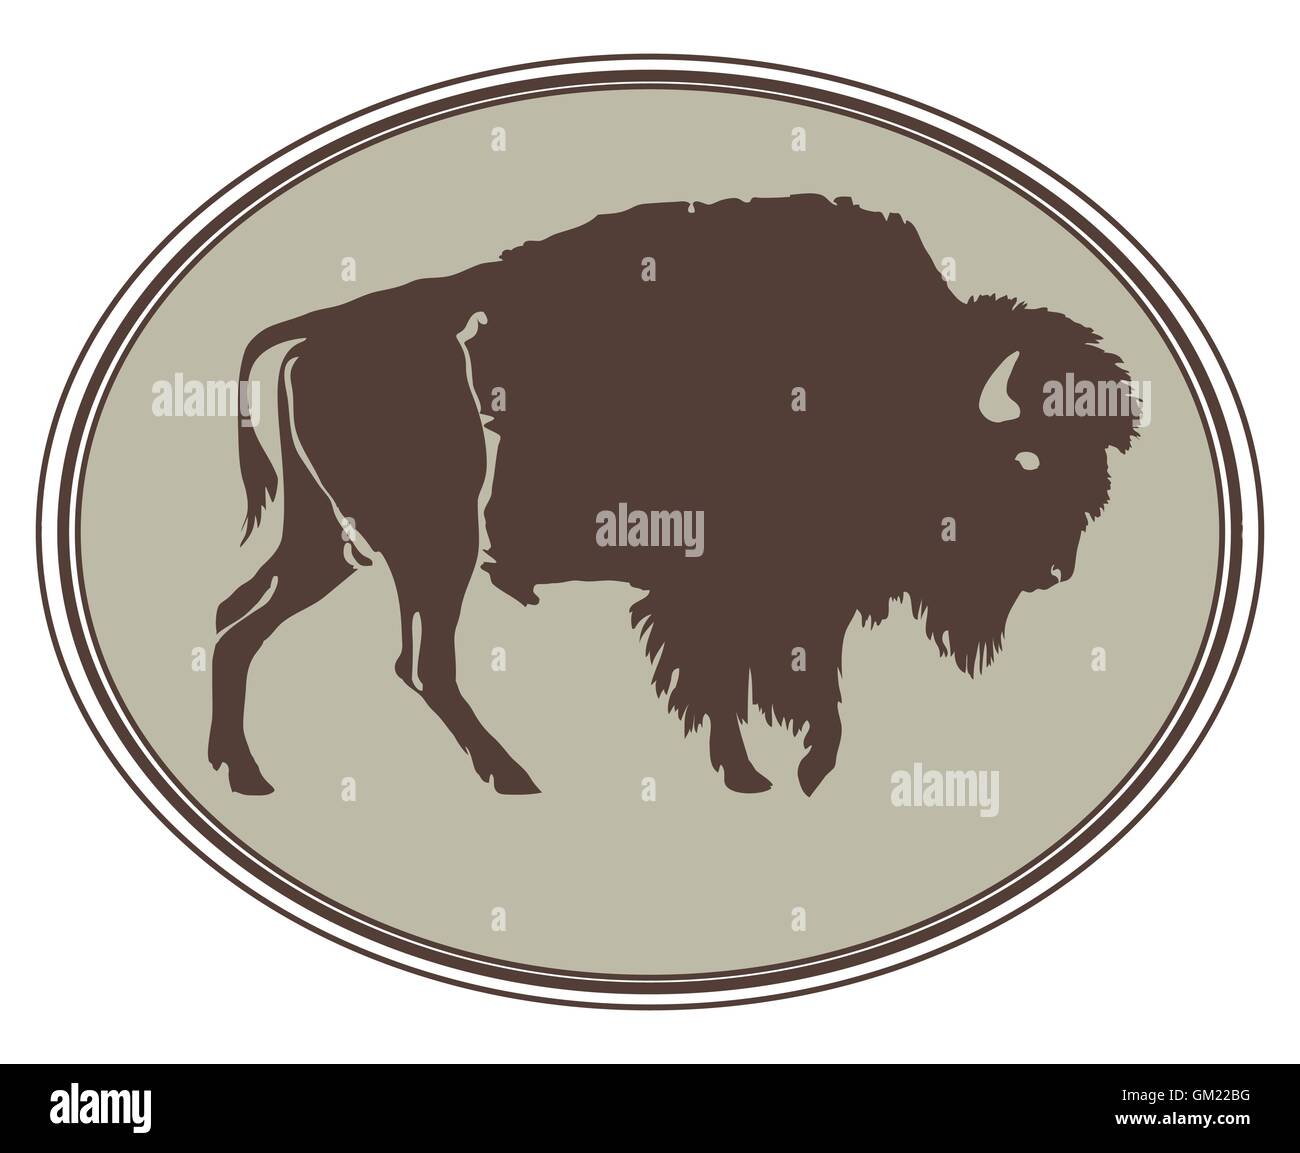 Buffalo silhouette. Hand-drawn illustration. Design for logo, t shirt, bag etc. Stock Vector